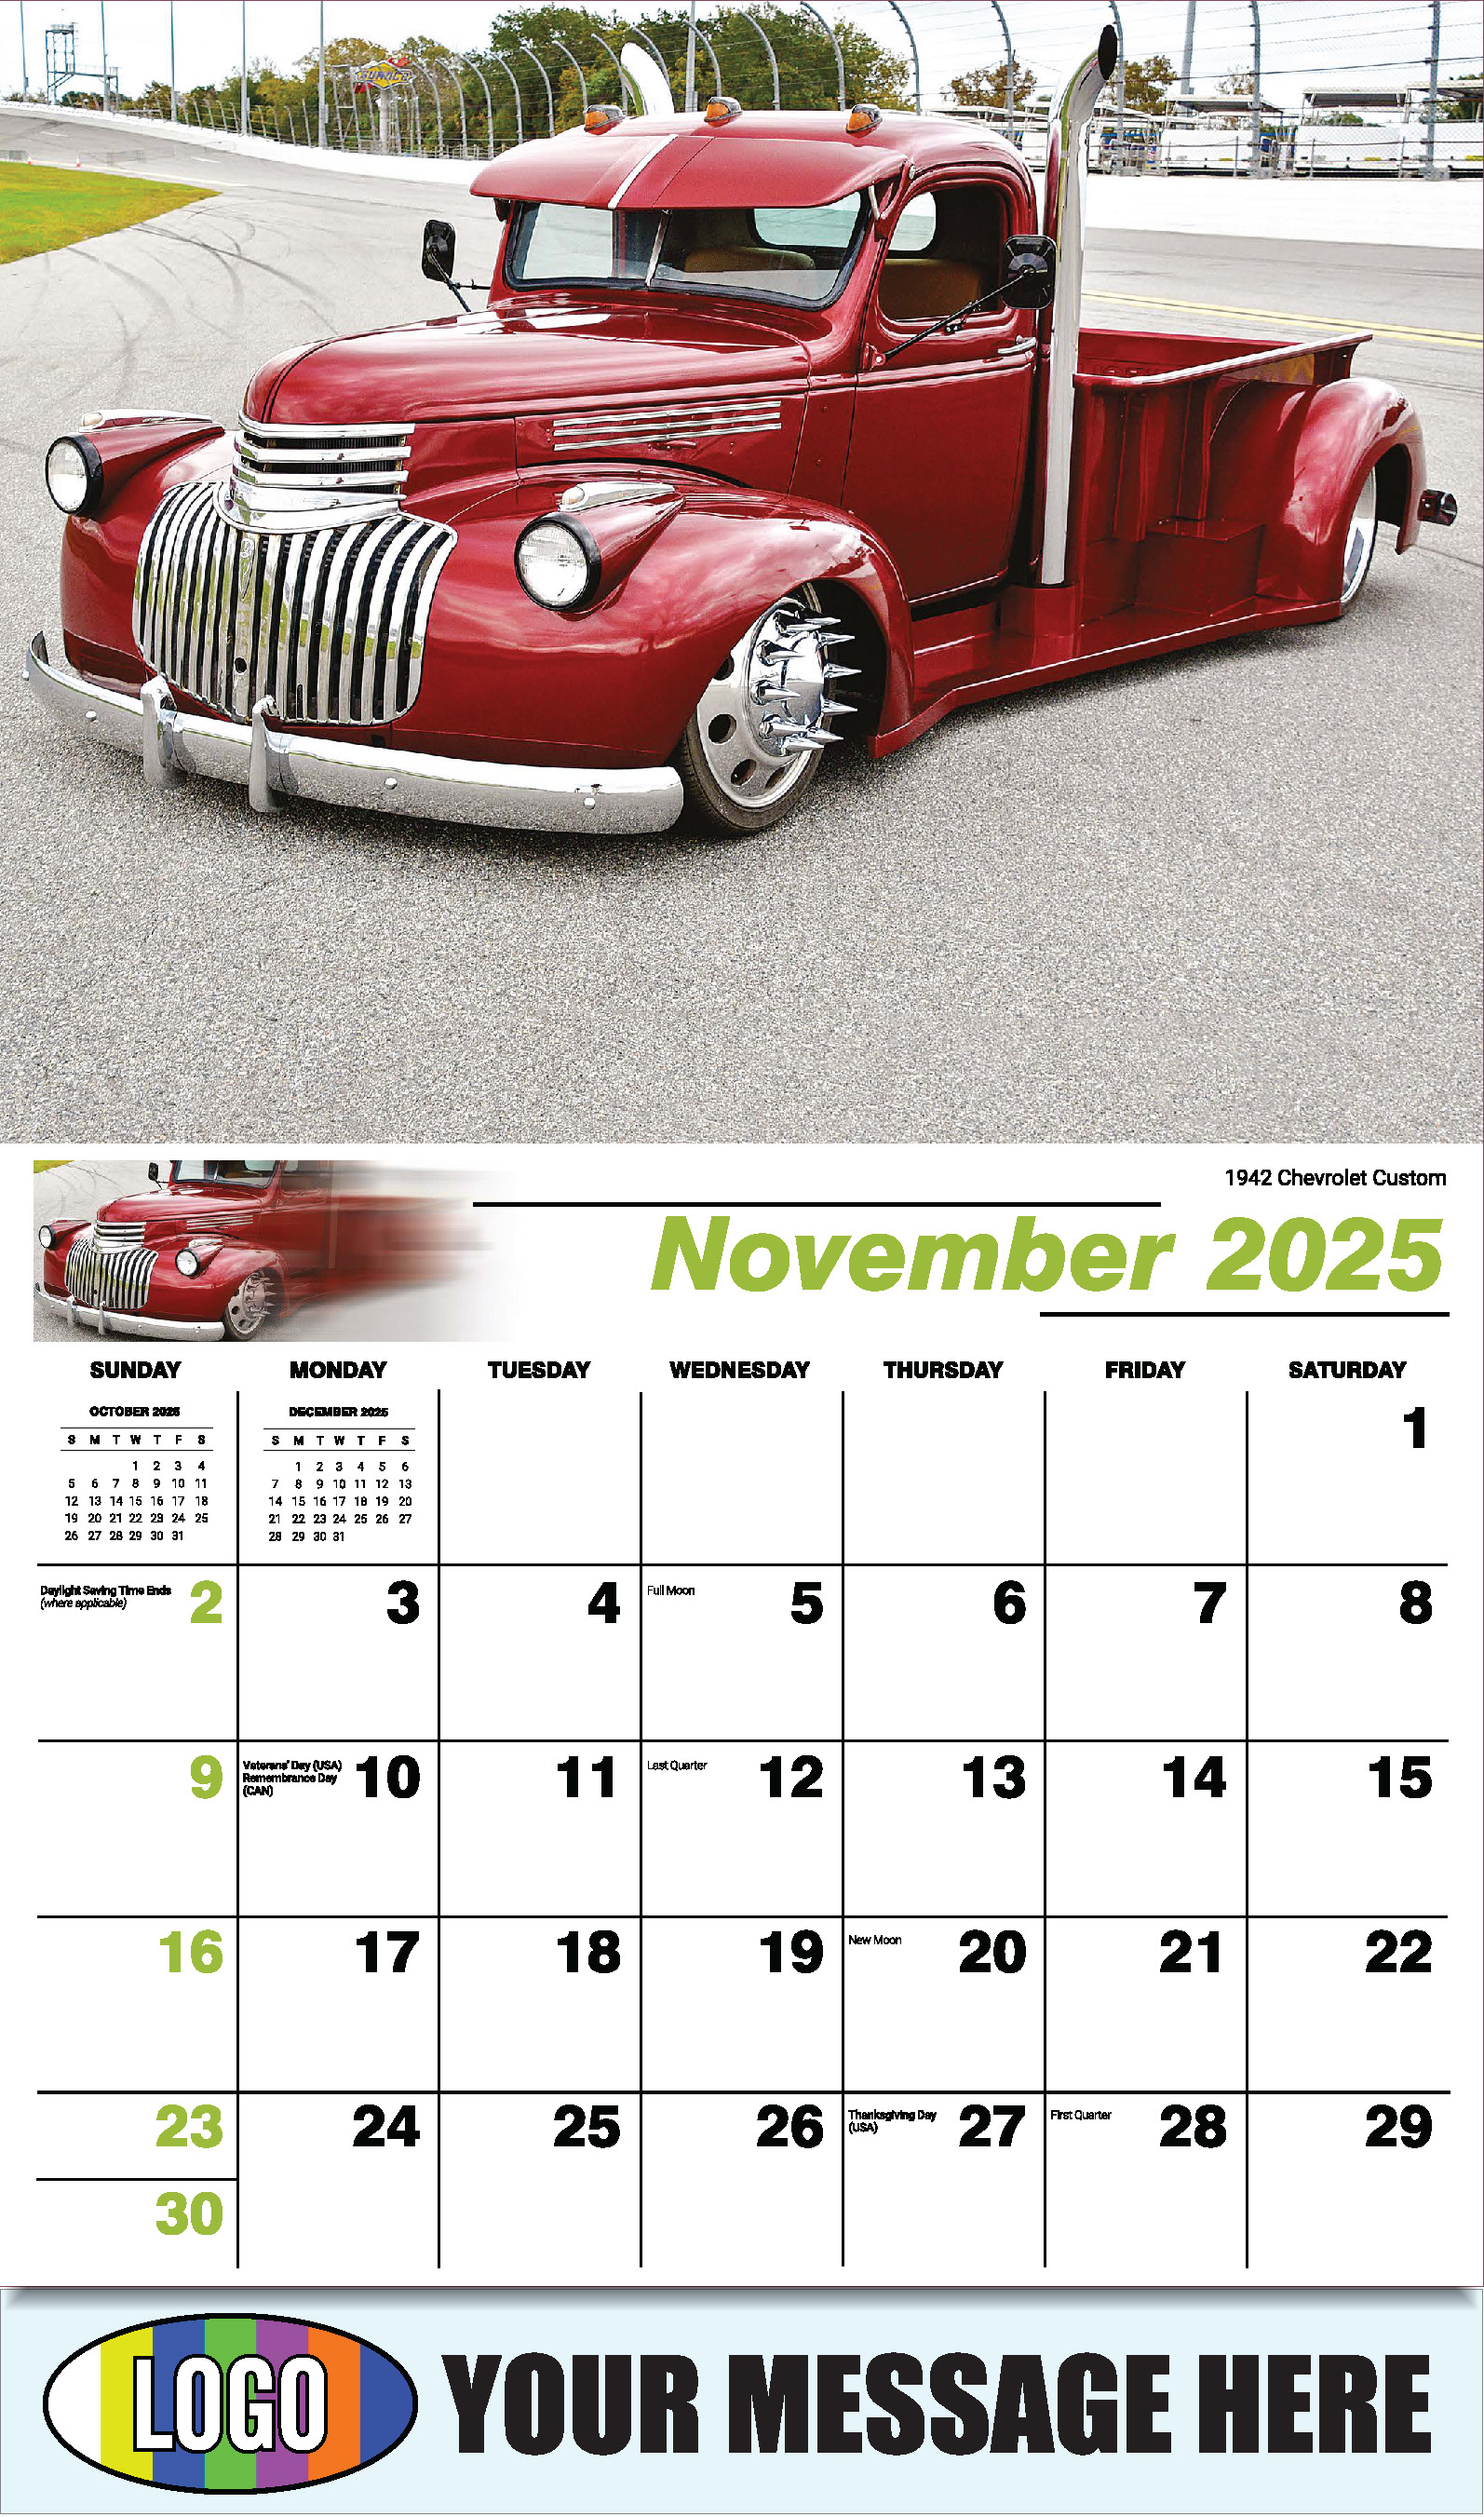 Pumped-Up Pickups 2025 Automotive Business Promo Calendar - November